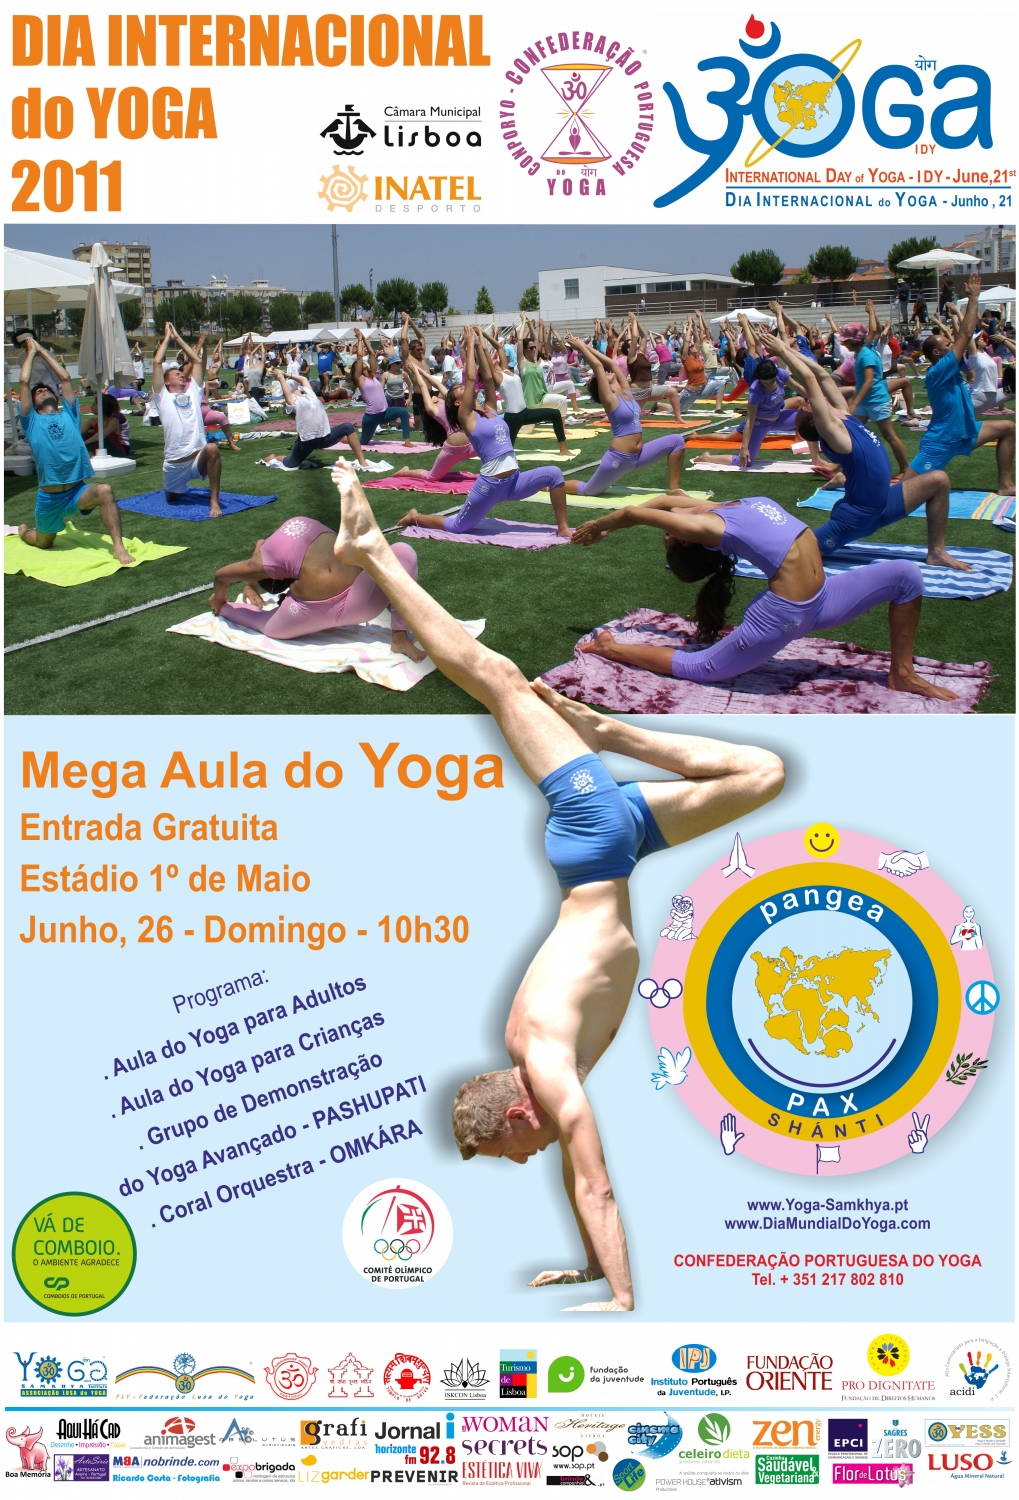 International Day of Yoga - IDY - 2011, Lisboa